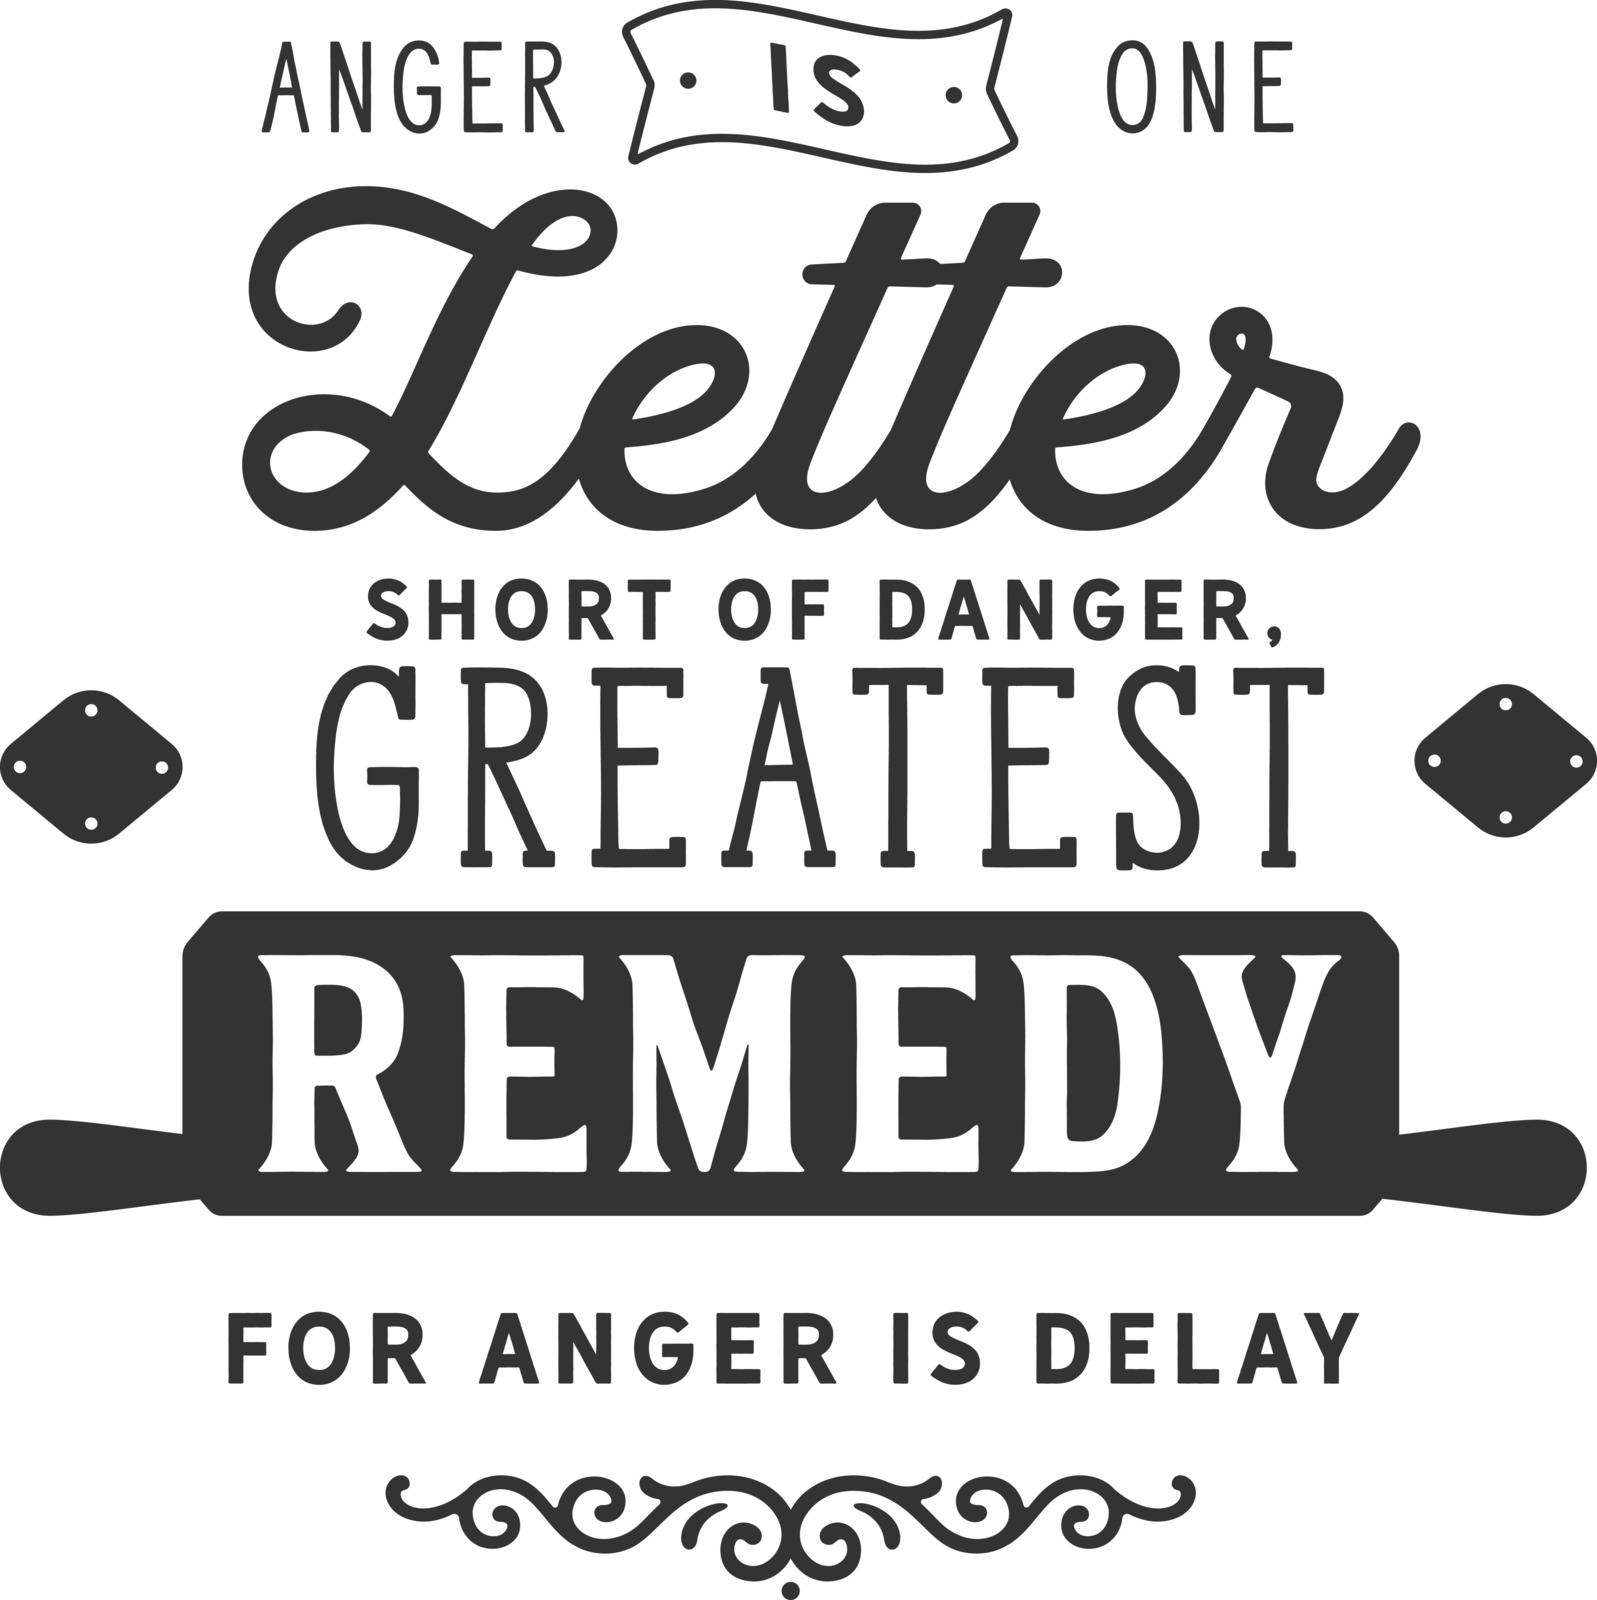 Anger is one letter short of danger by teguh_jam@yahoo.com